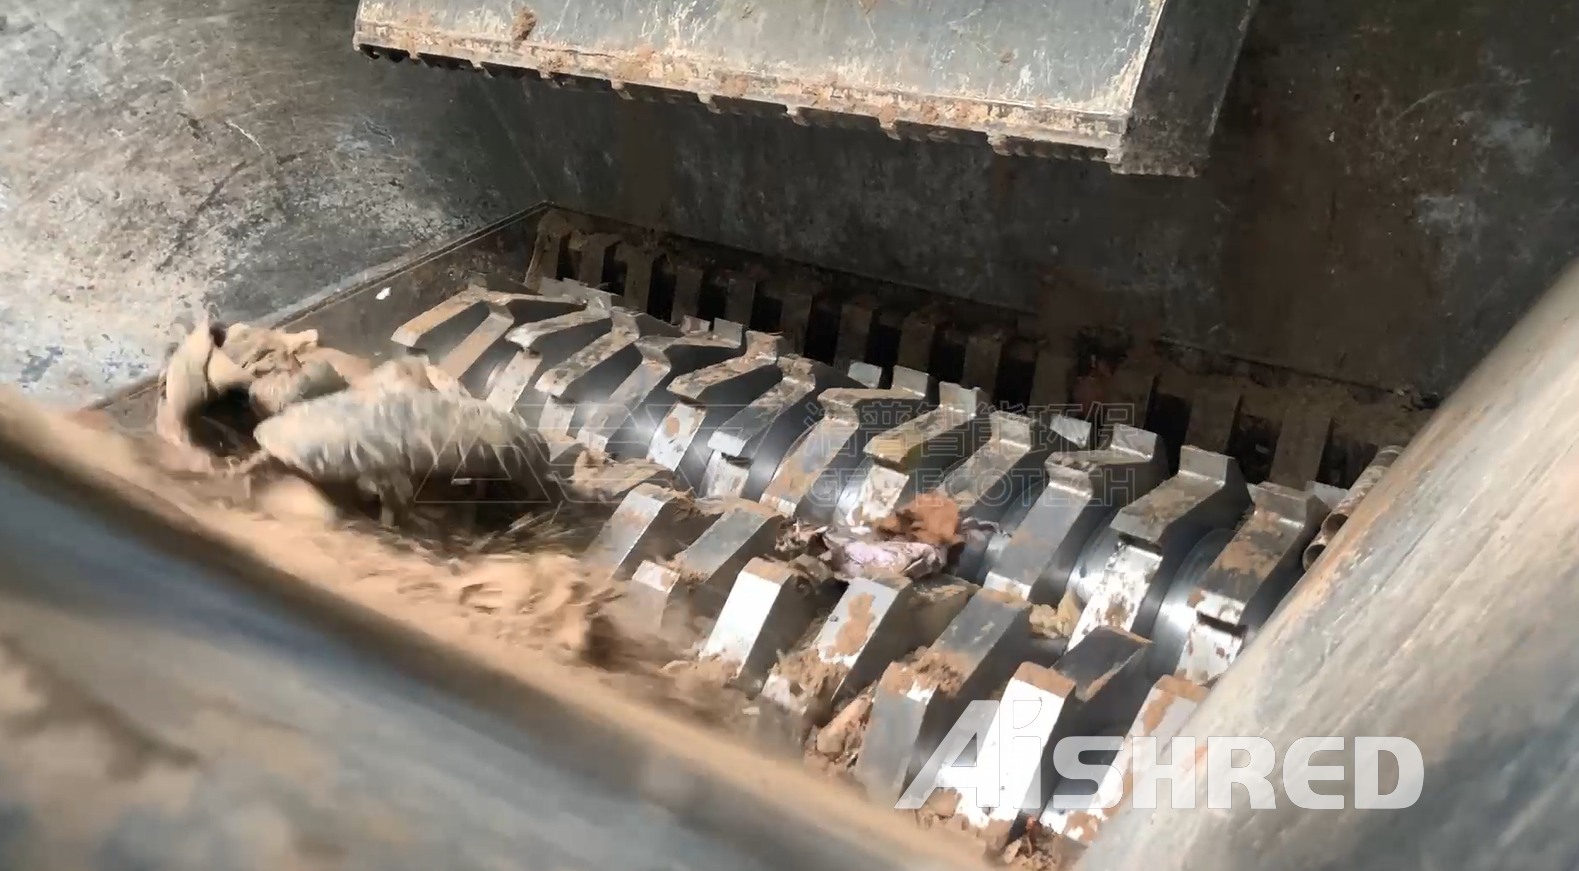 Twin-Shaft Shredder Crushes Concrete Waste